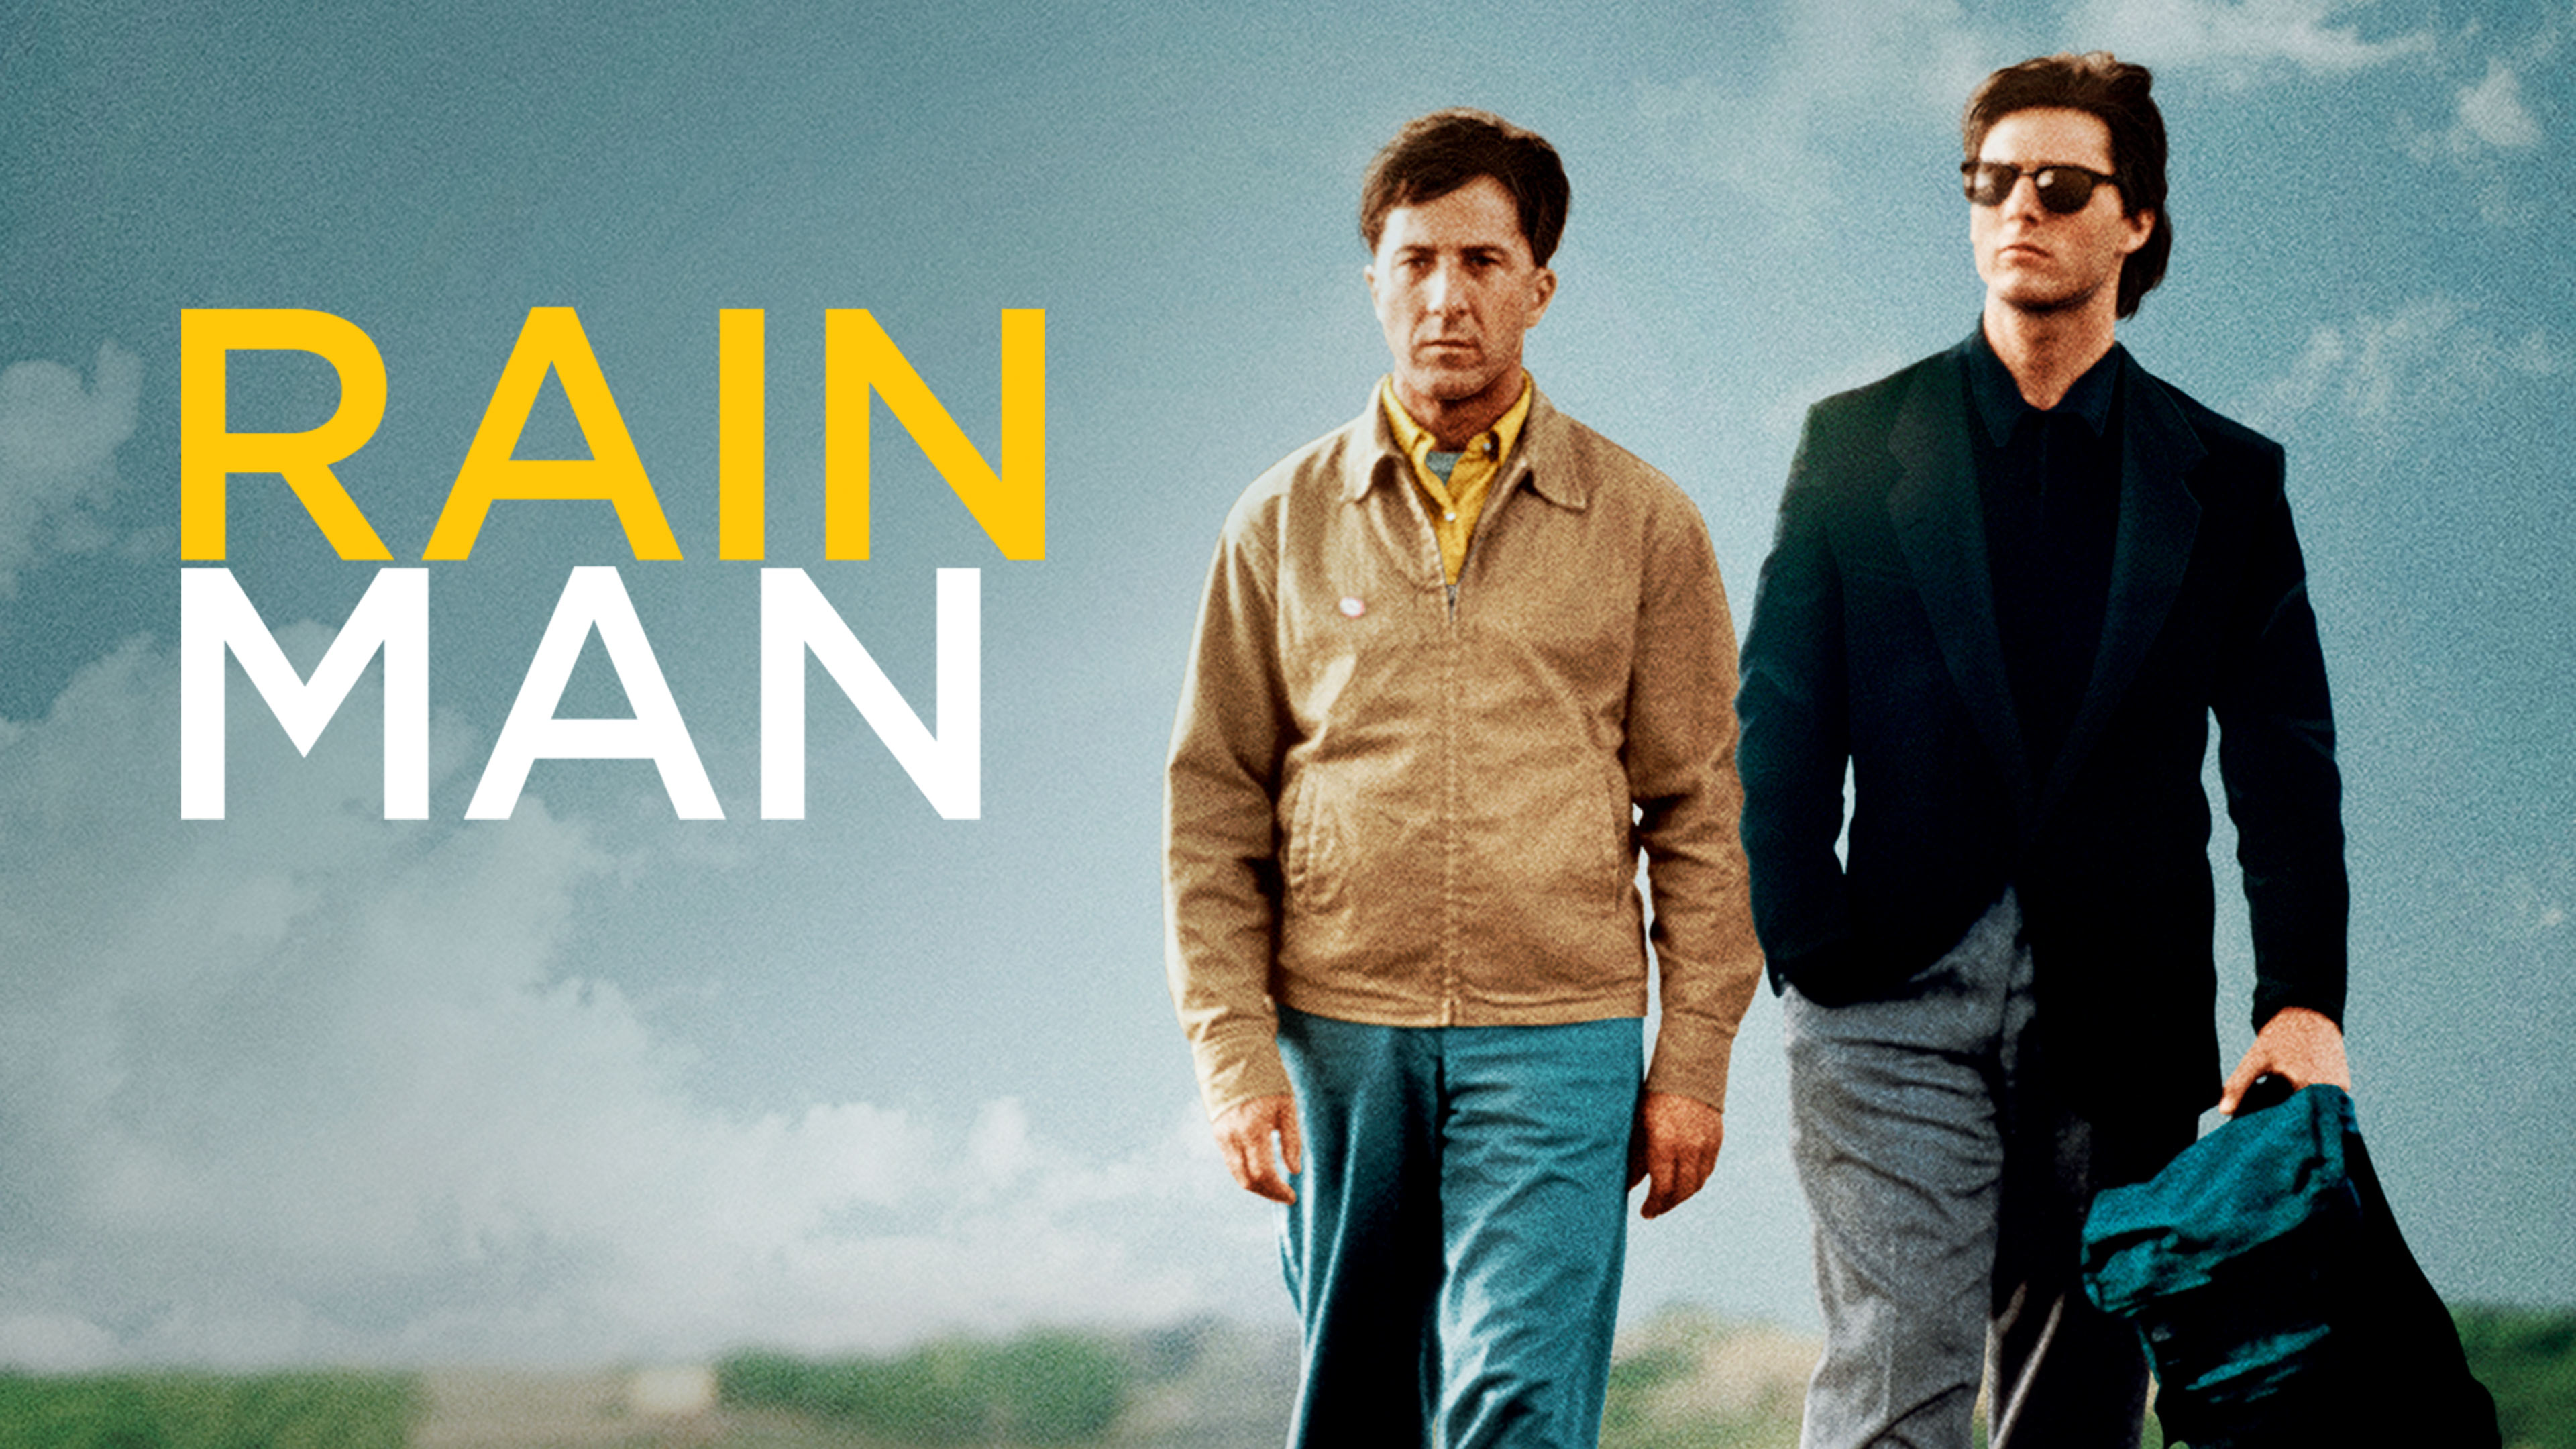 Watch Rain Man Online | Stream Full Movies